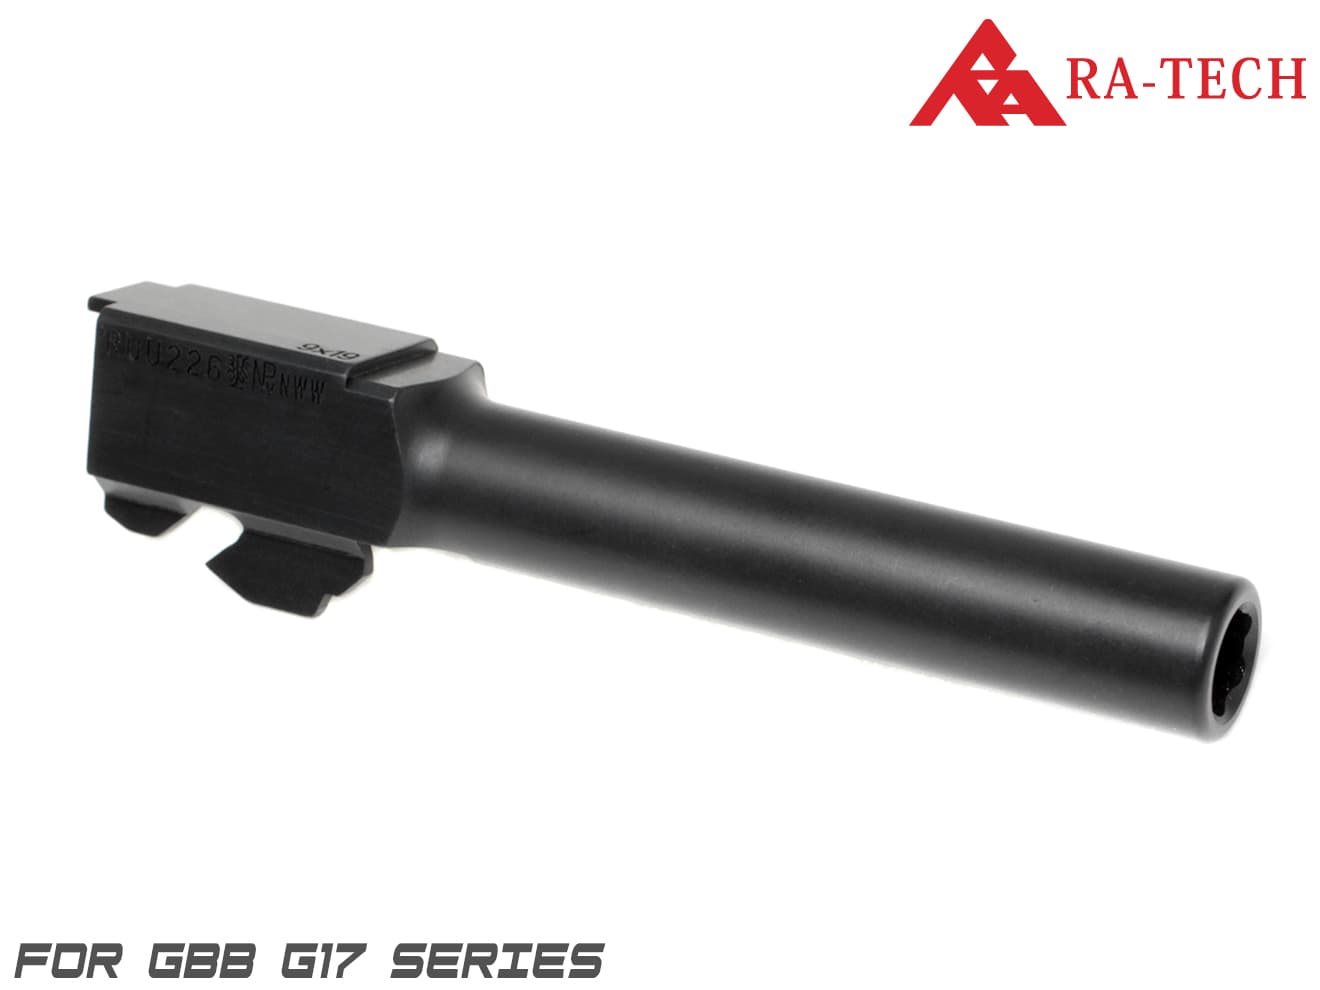 RA-TECH G17 CNC スチール アウターバレル 2015 金属バレル 東京マルイ グロック GLOCK G17対応 リアル化 G17 Gen4 RUU226刻印 高精度CNC リアル造形を再現!